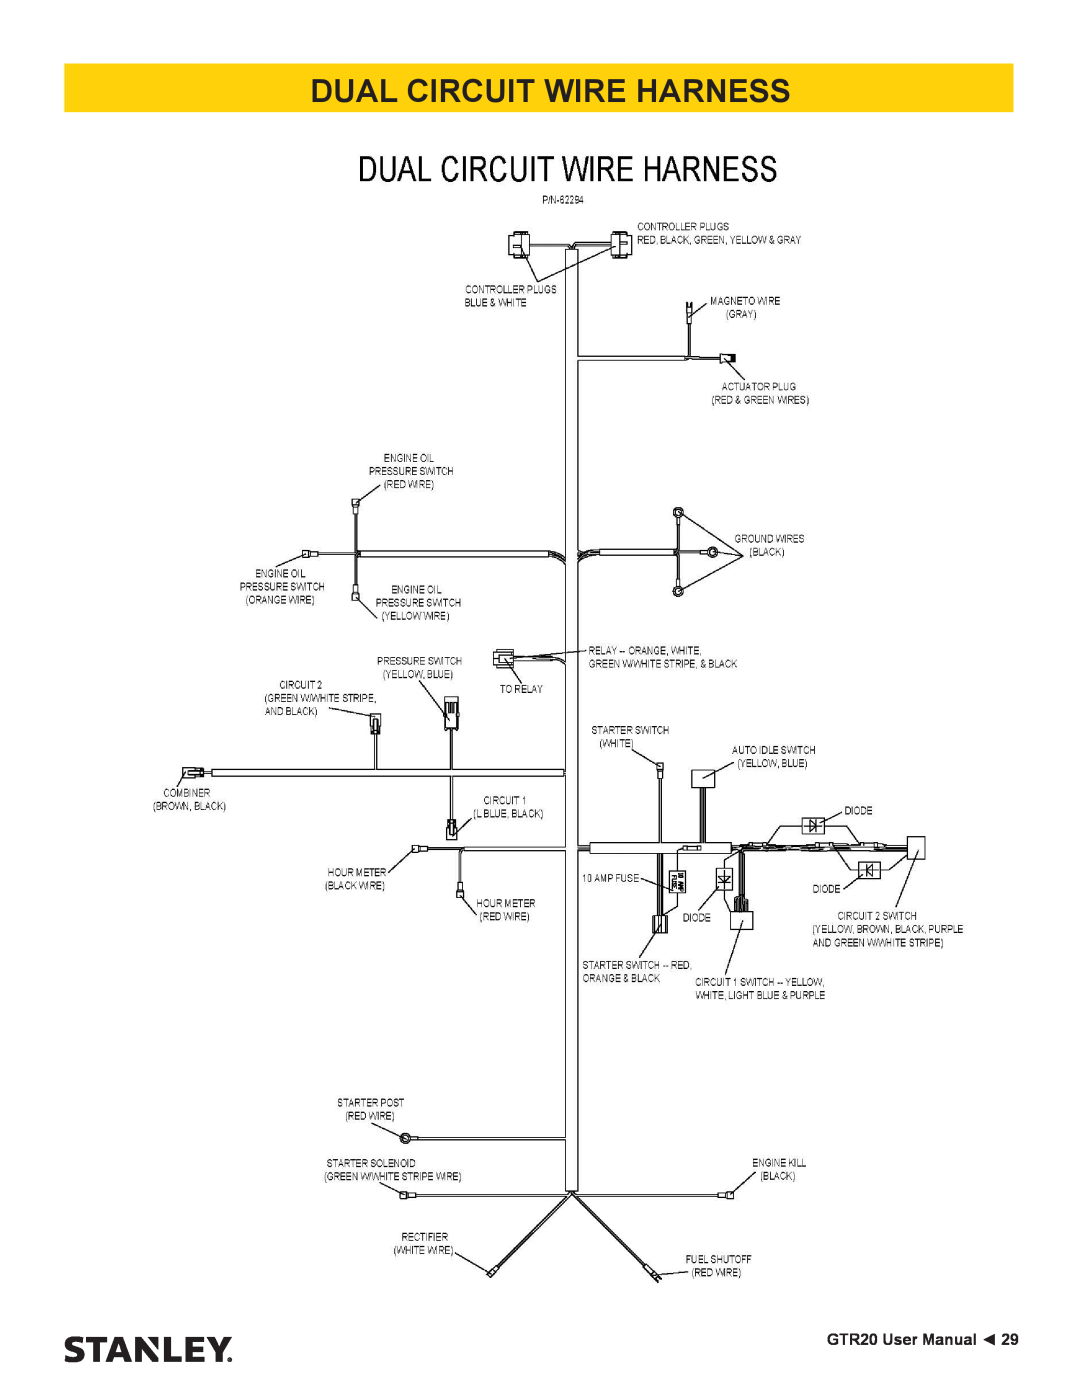 Stanley Black & Decker GTR20 user manual Dual Circuit Wire Harness 